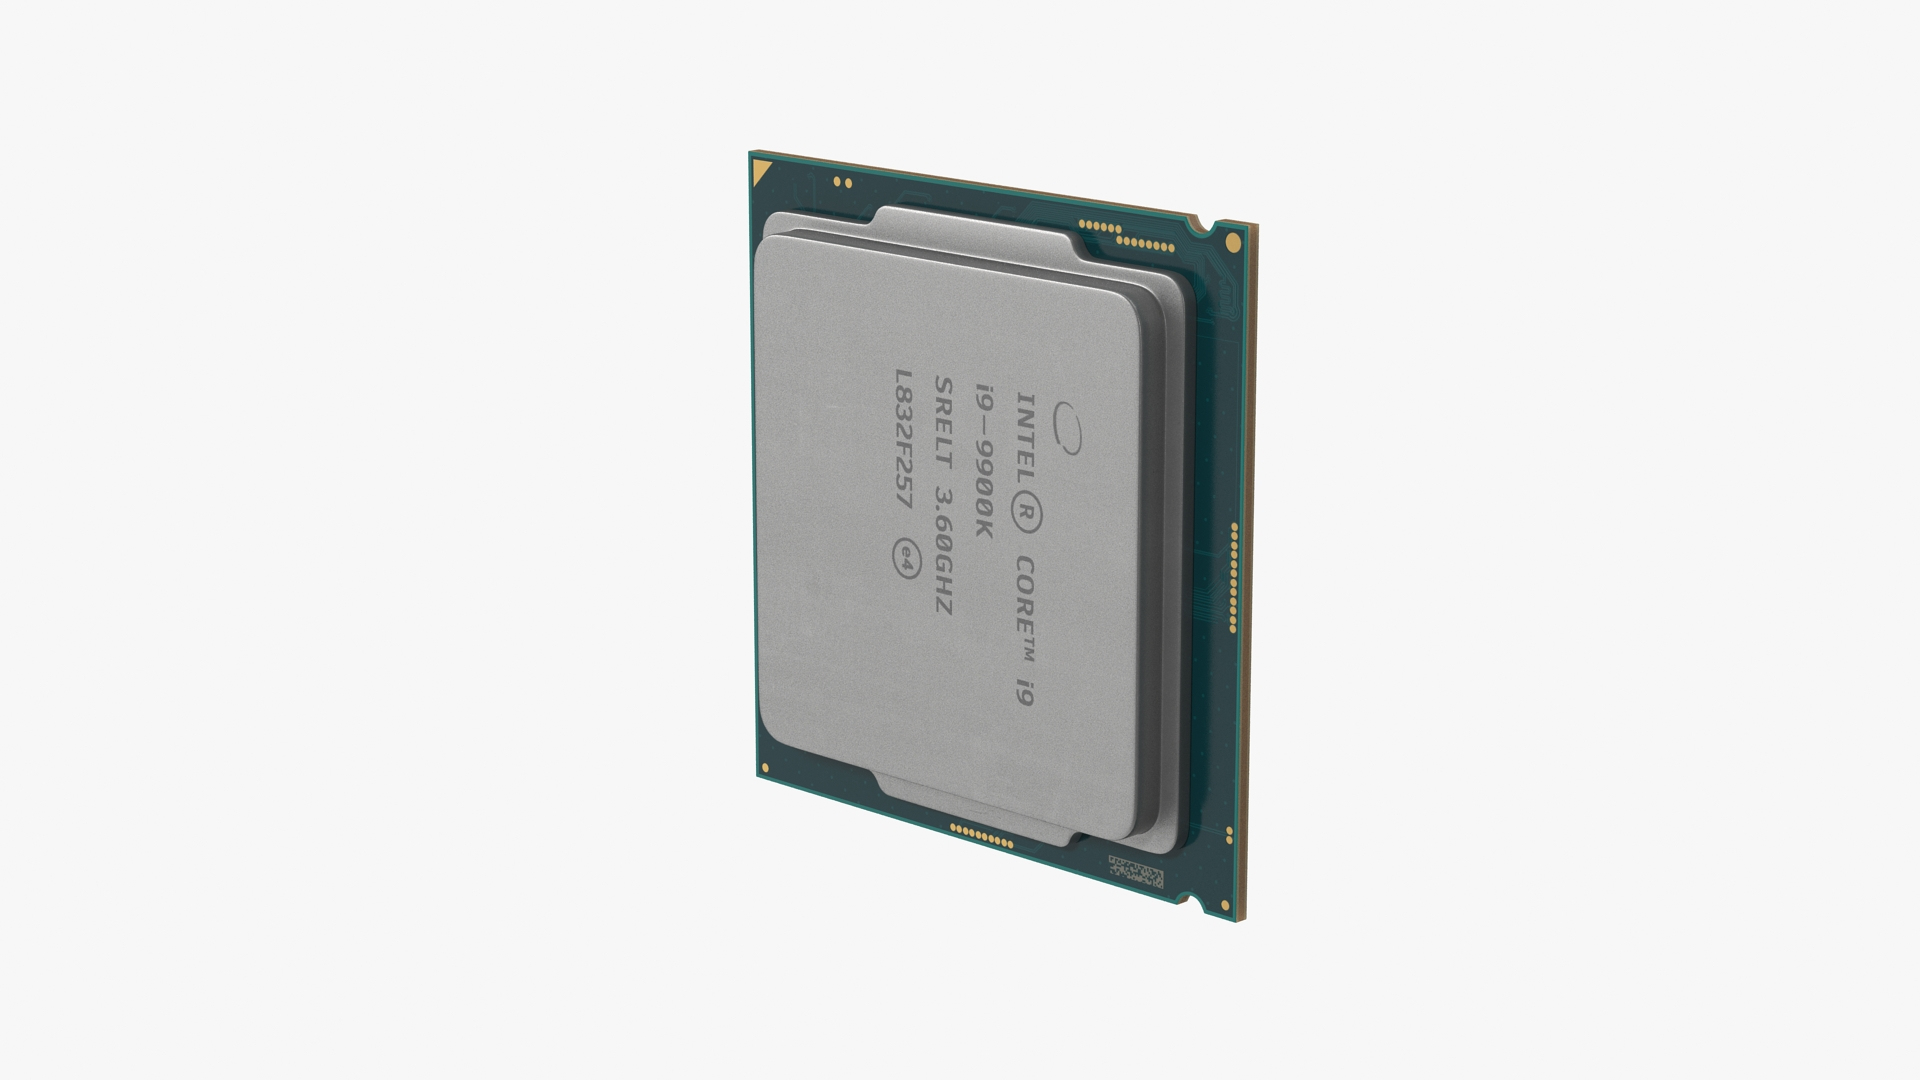 3D intel core i9 9900k model - TurboSquid 1434279